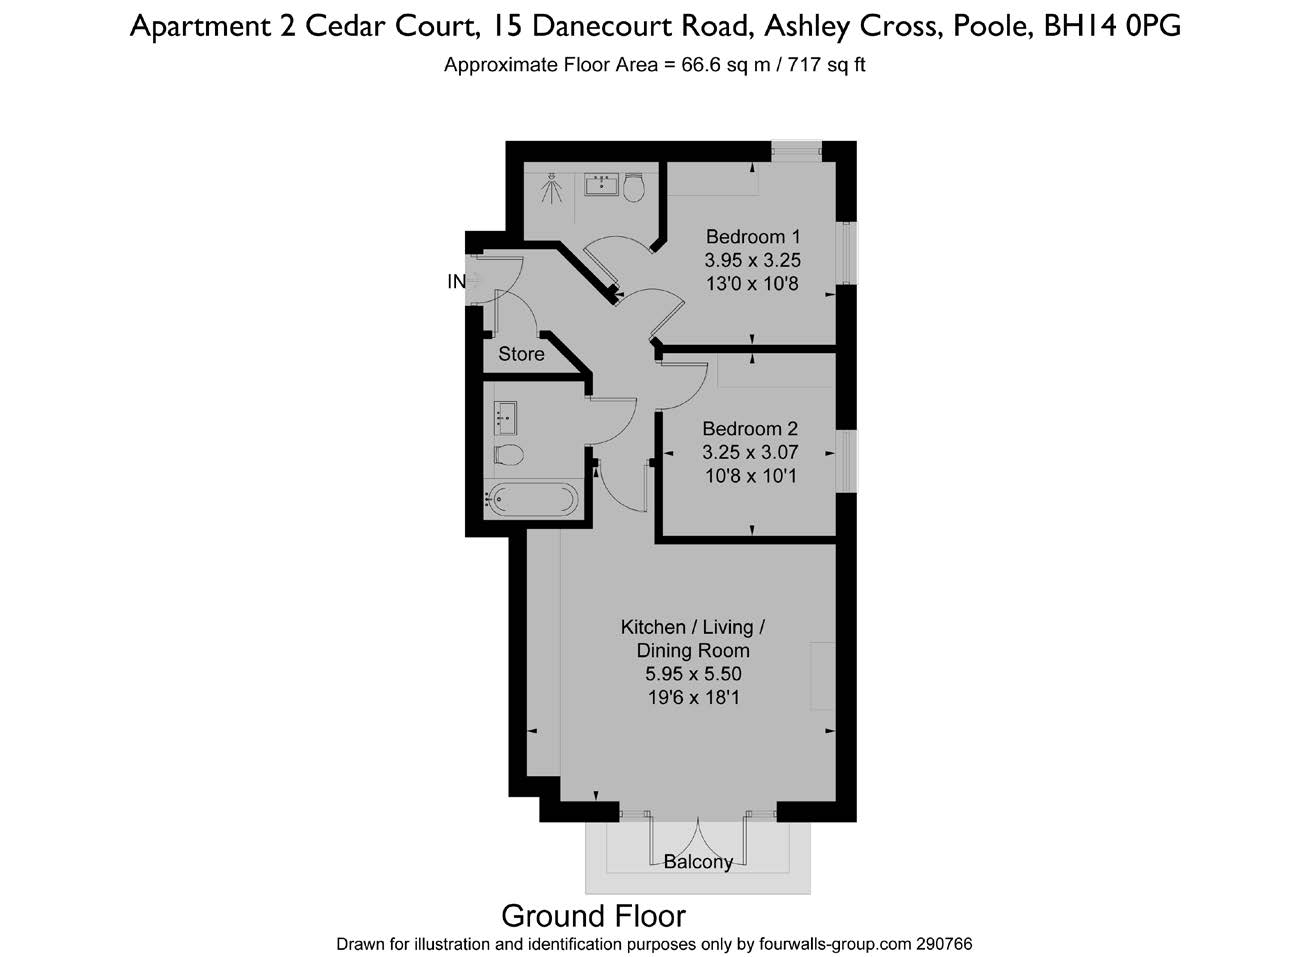 Apartment 2 Cedar Court Floor plan